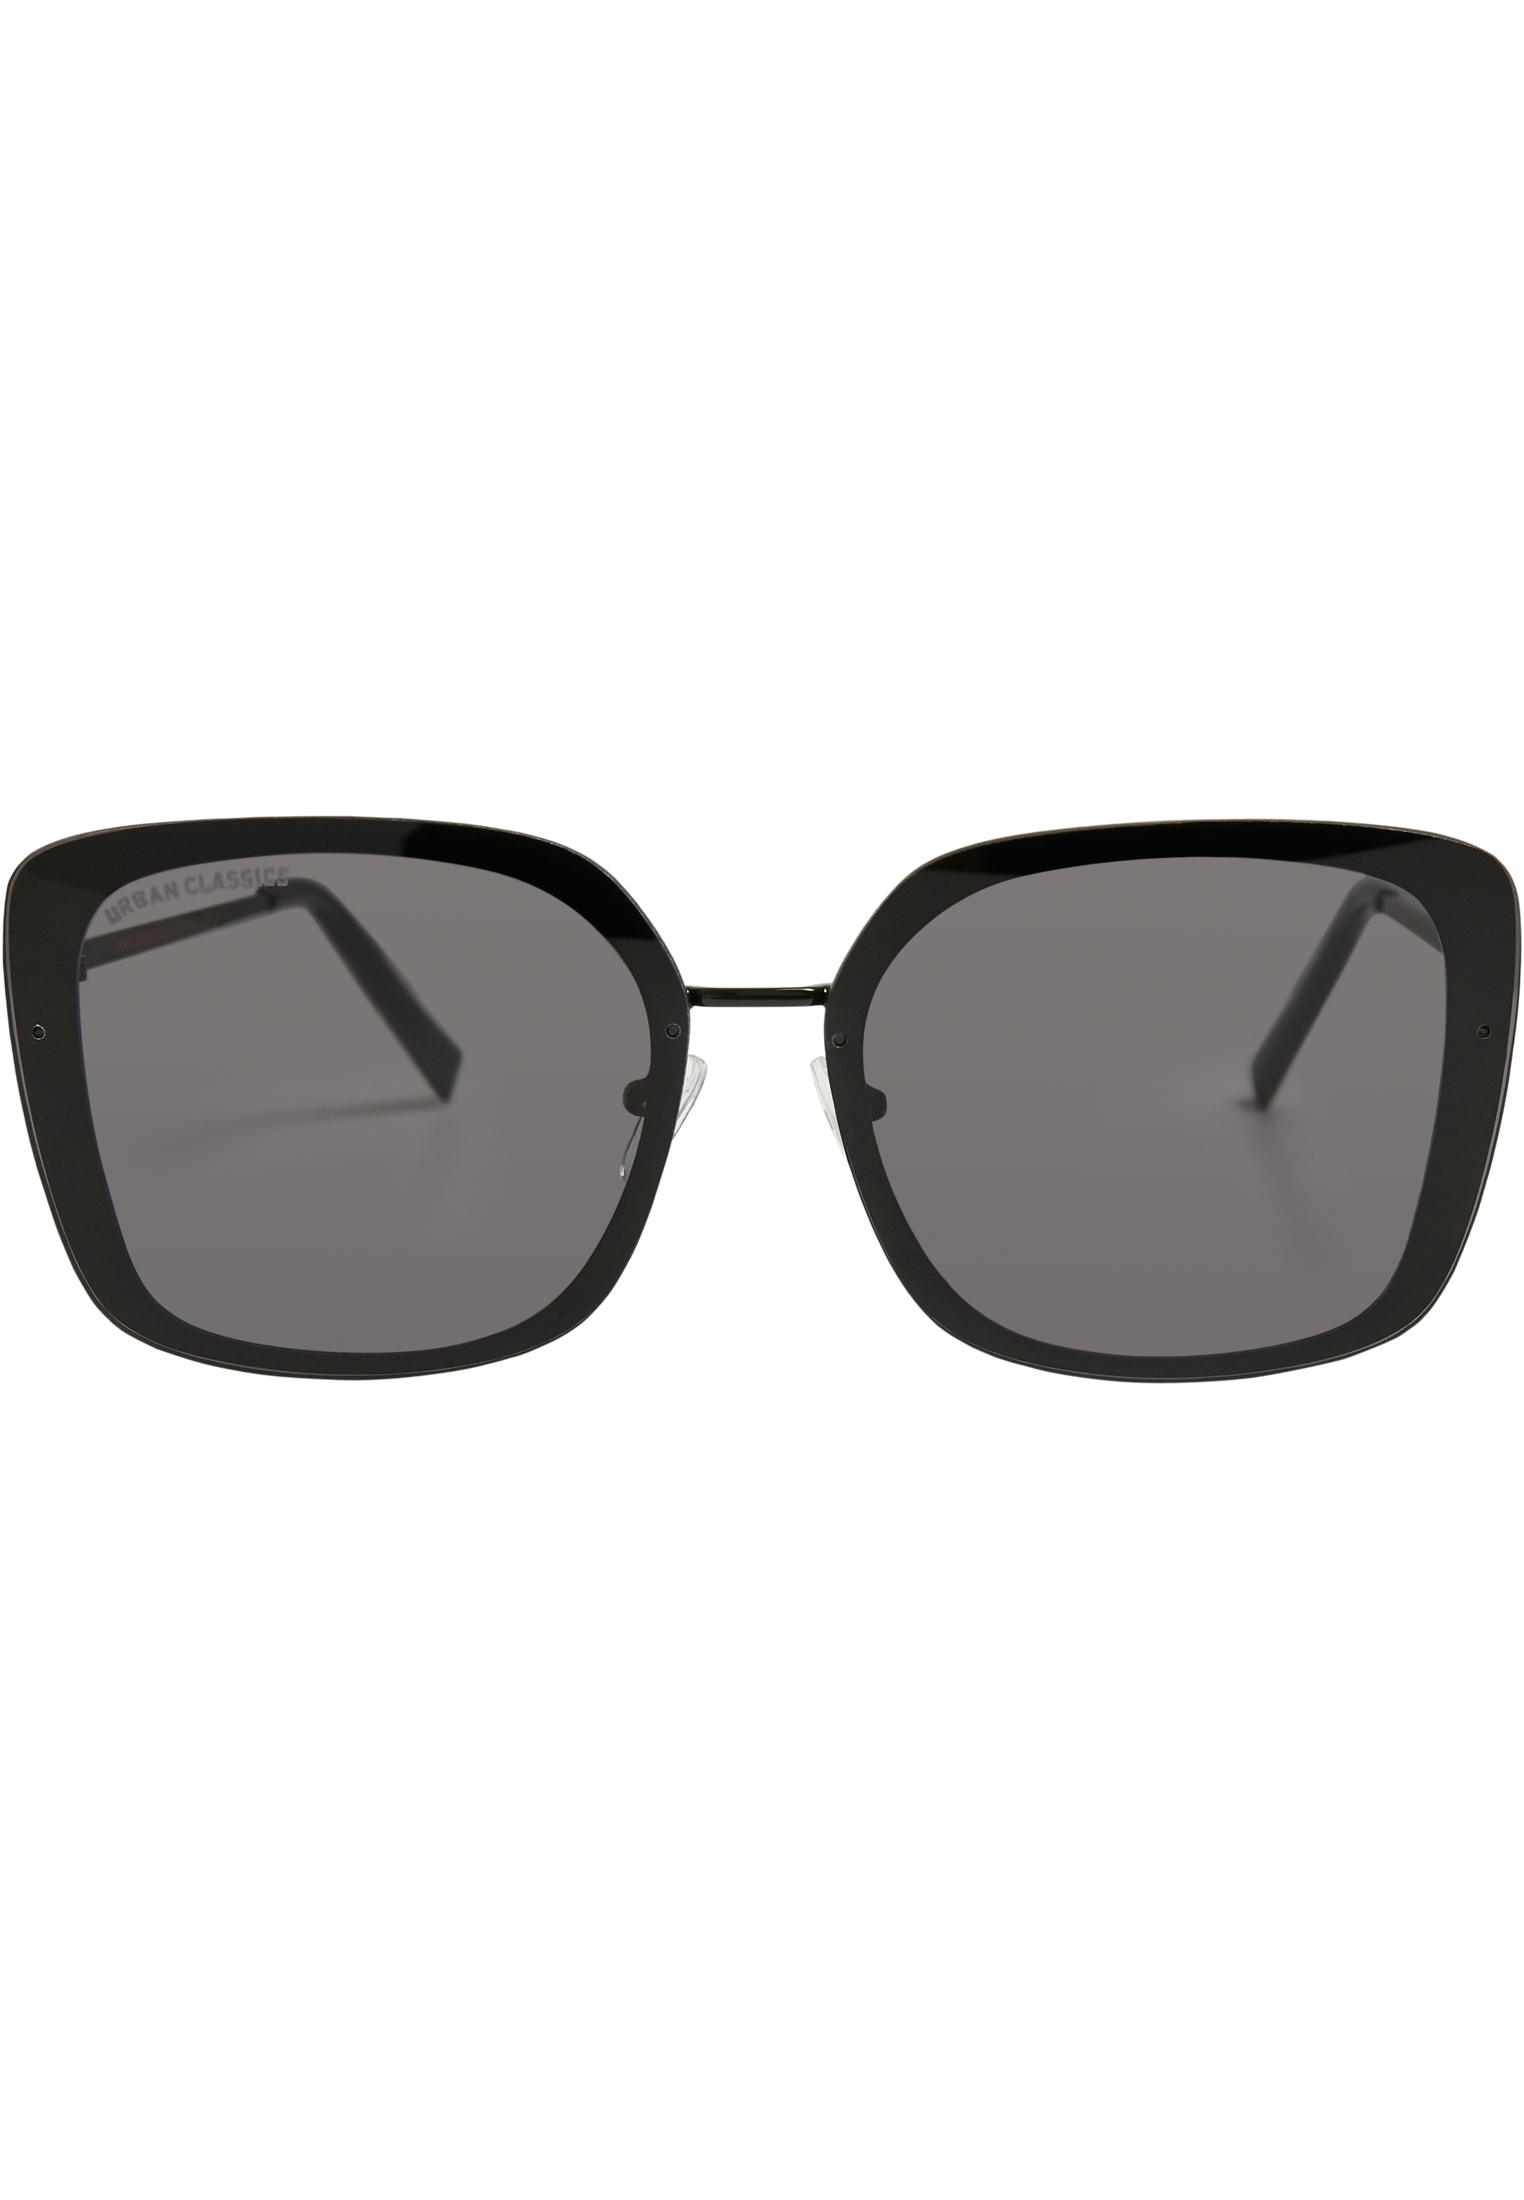 Sonnenbrillen Sunglasses December UC in Farbe black